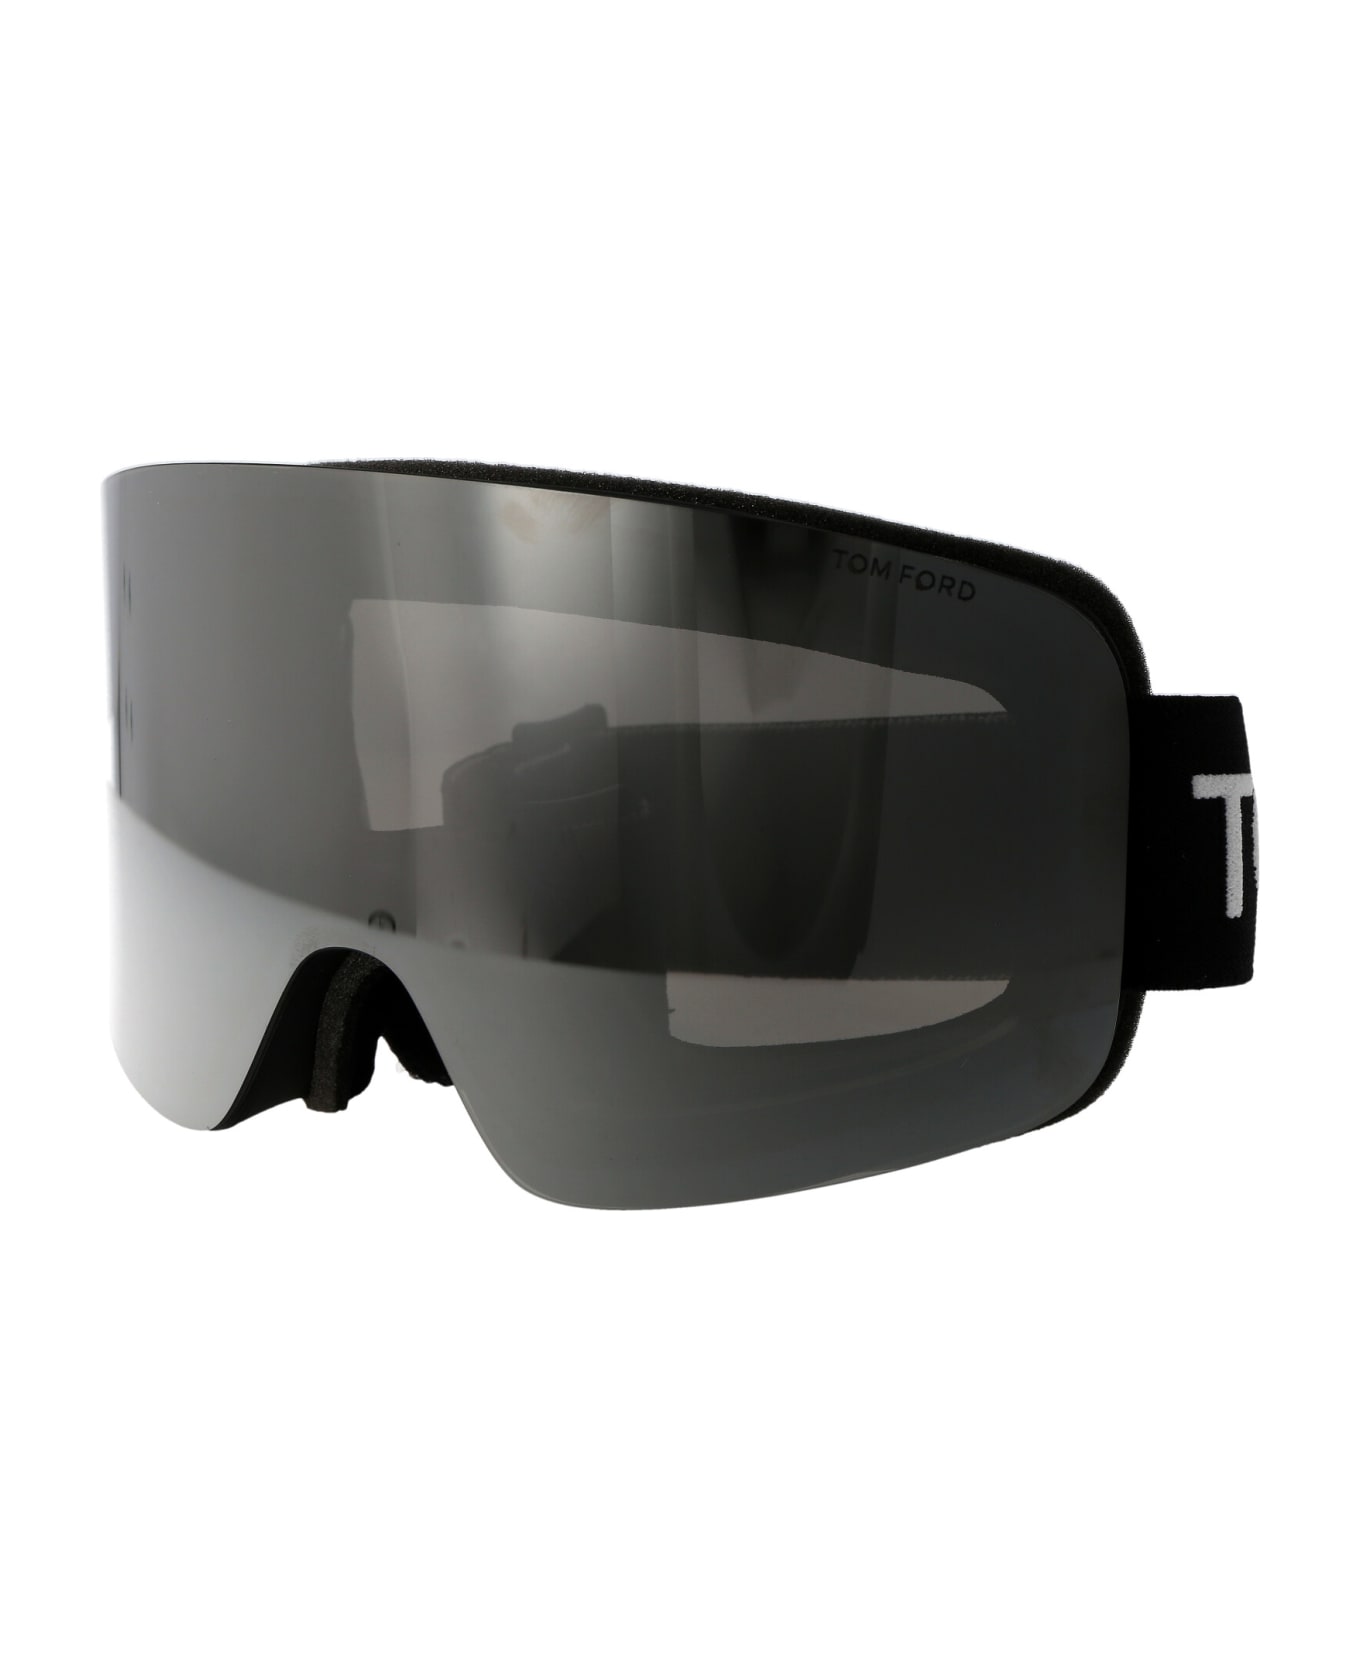 Tom Ford Eyewear Ft1124 Sunglasses - 01sunglasses COCO GR